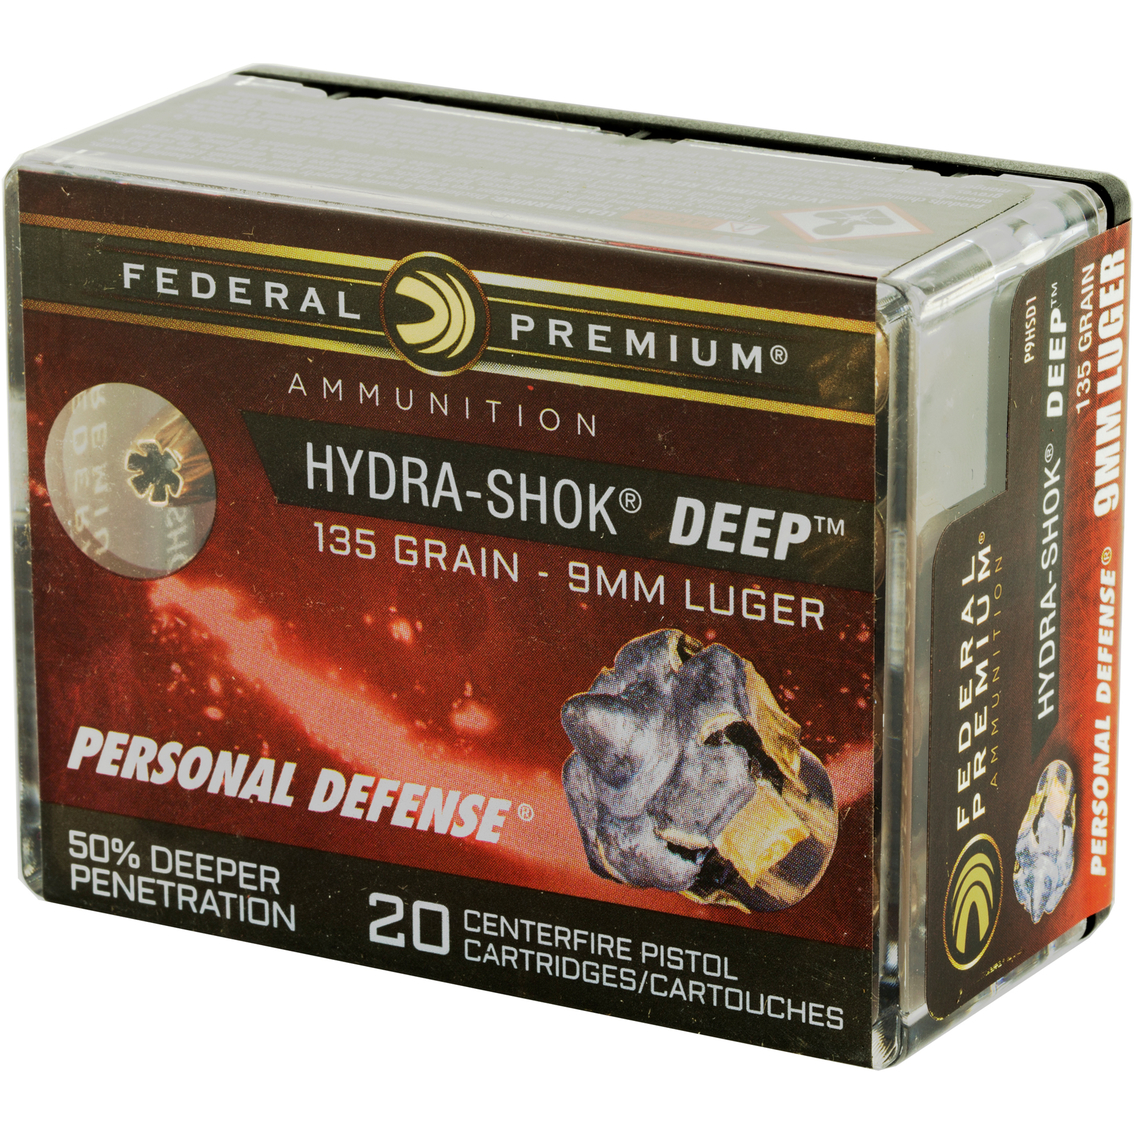 Federal Hydra-Shok Deep 9mm 135 Gr. JHP, 20 Rounds - Image 2 of 3